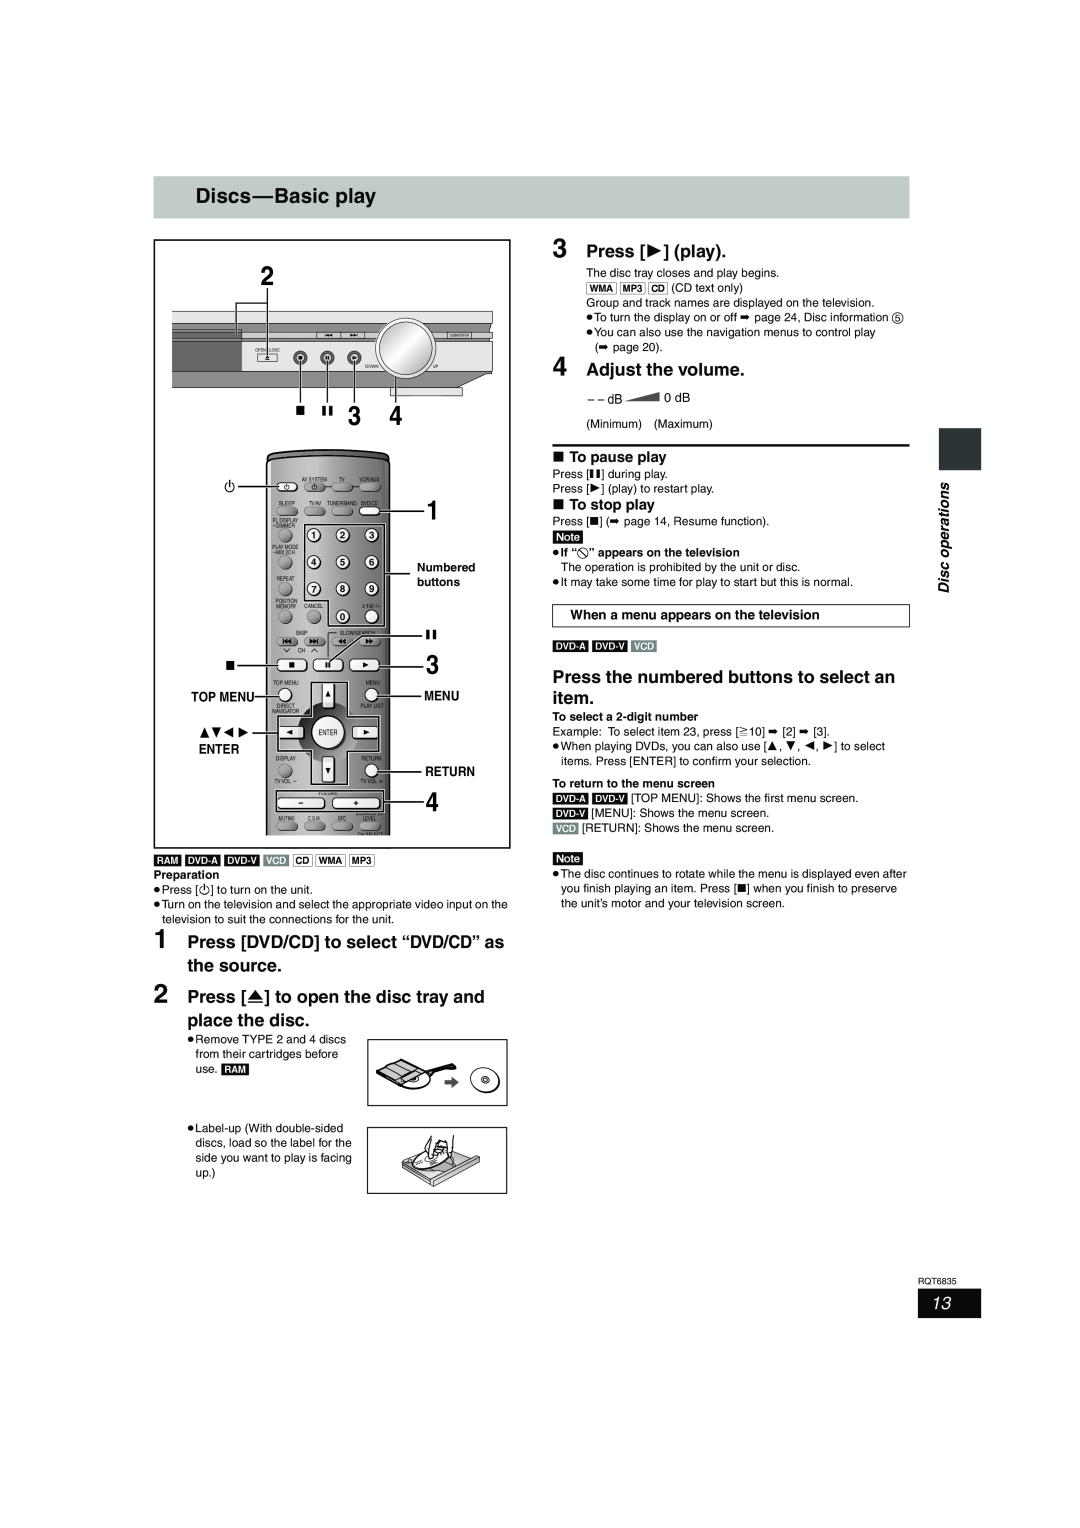 Panasonic SC-HT500 Discs-Basicplay, Press DVD/CD to select “DVD/CD” as the source, Press 1 play, Adjust the volume, Menu 